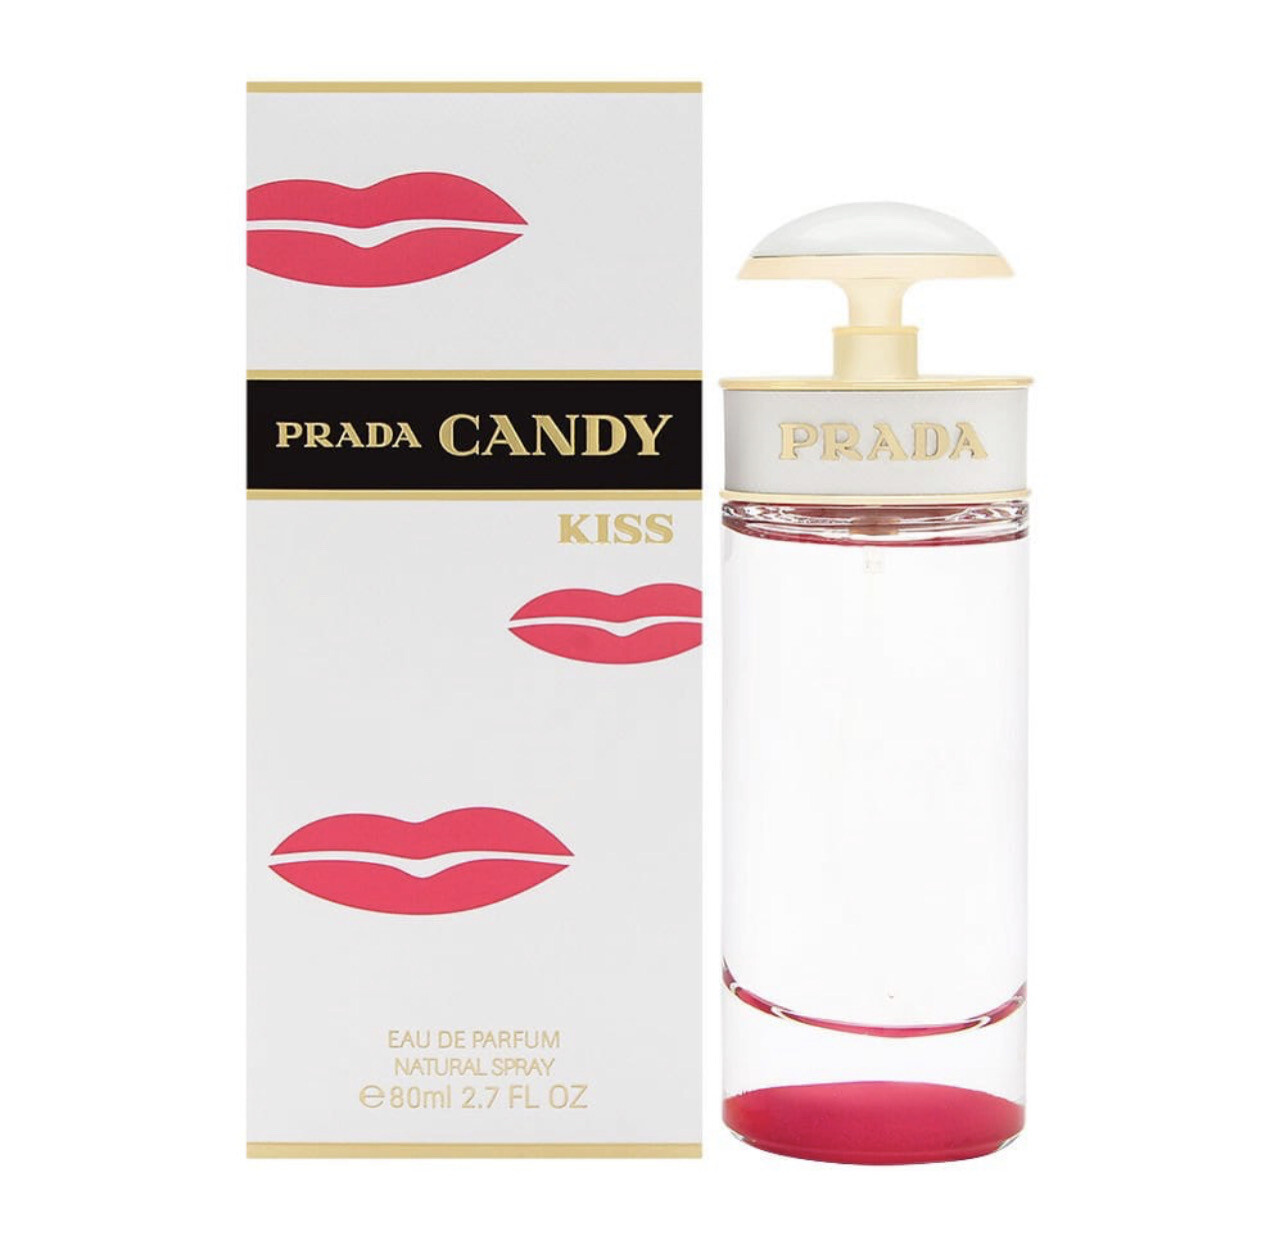 PRADA - CANDY Kiss